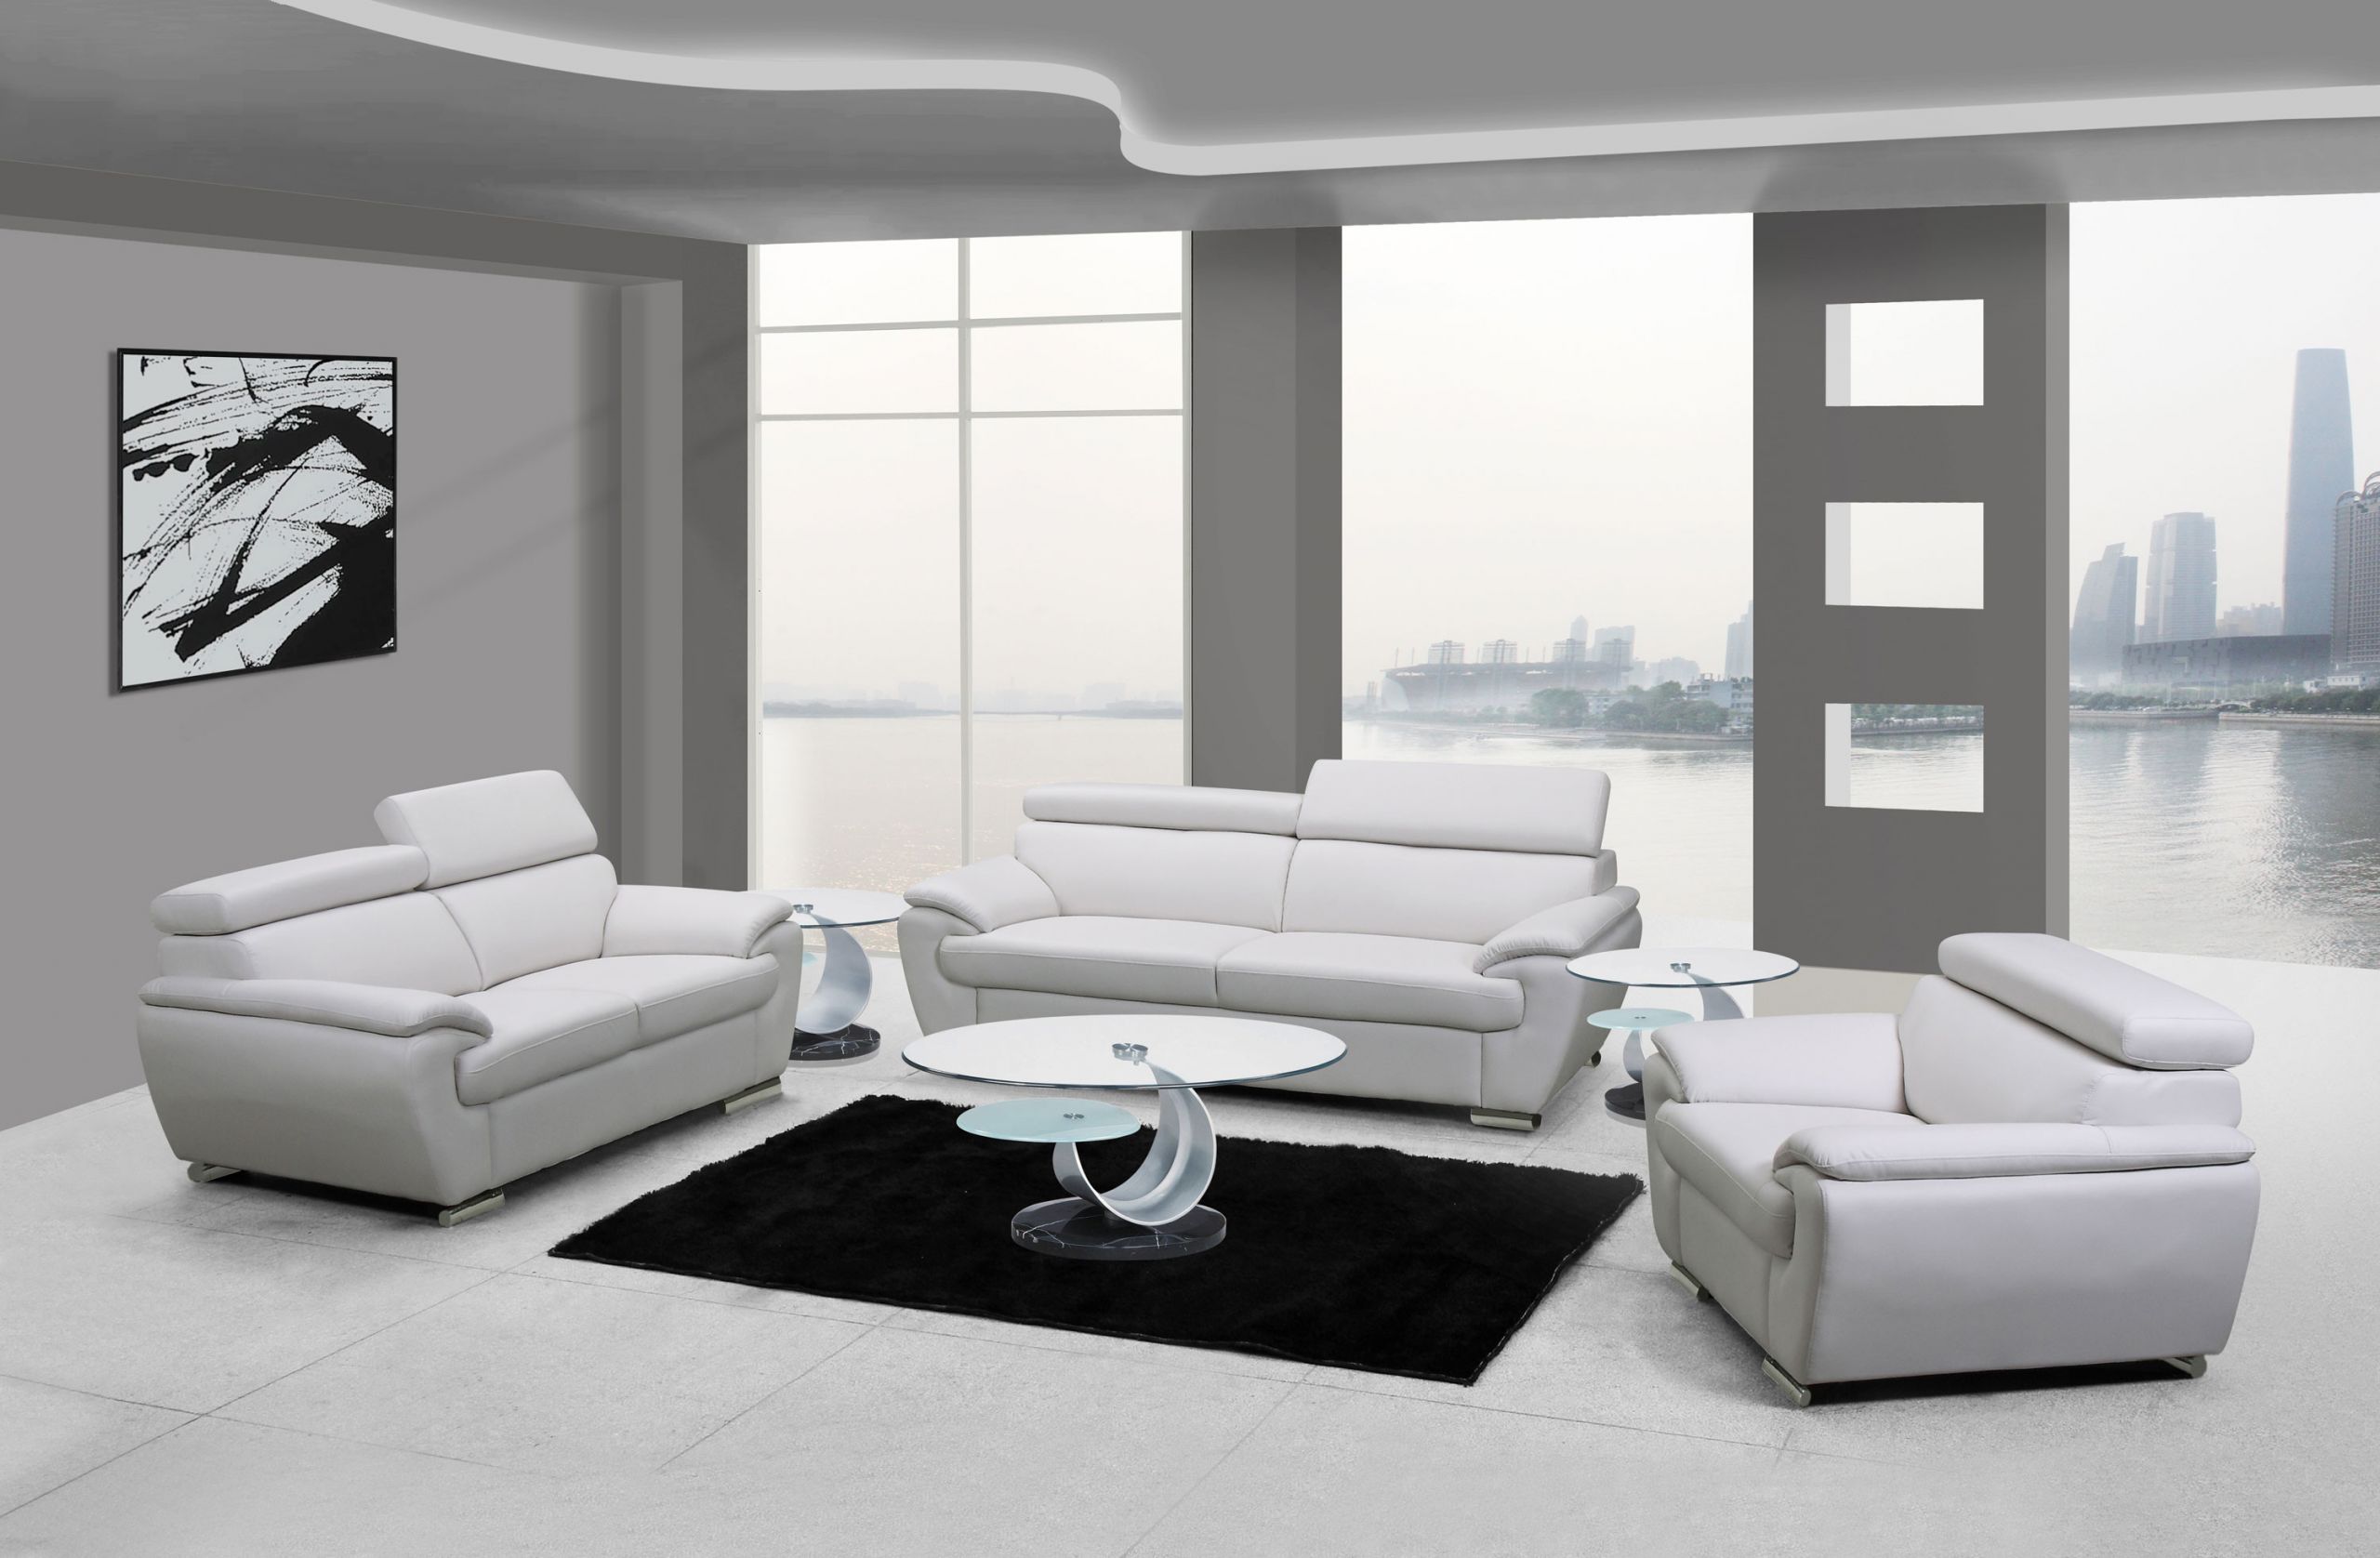 White Living Room Chair
 Naples White Leather Living Room